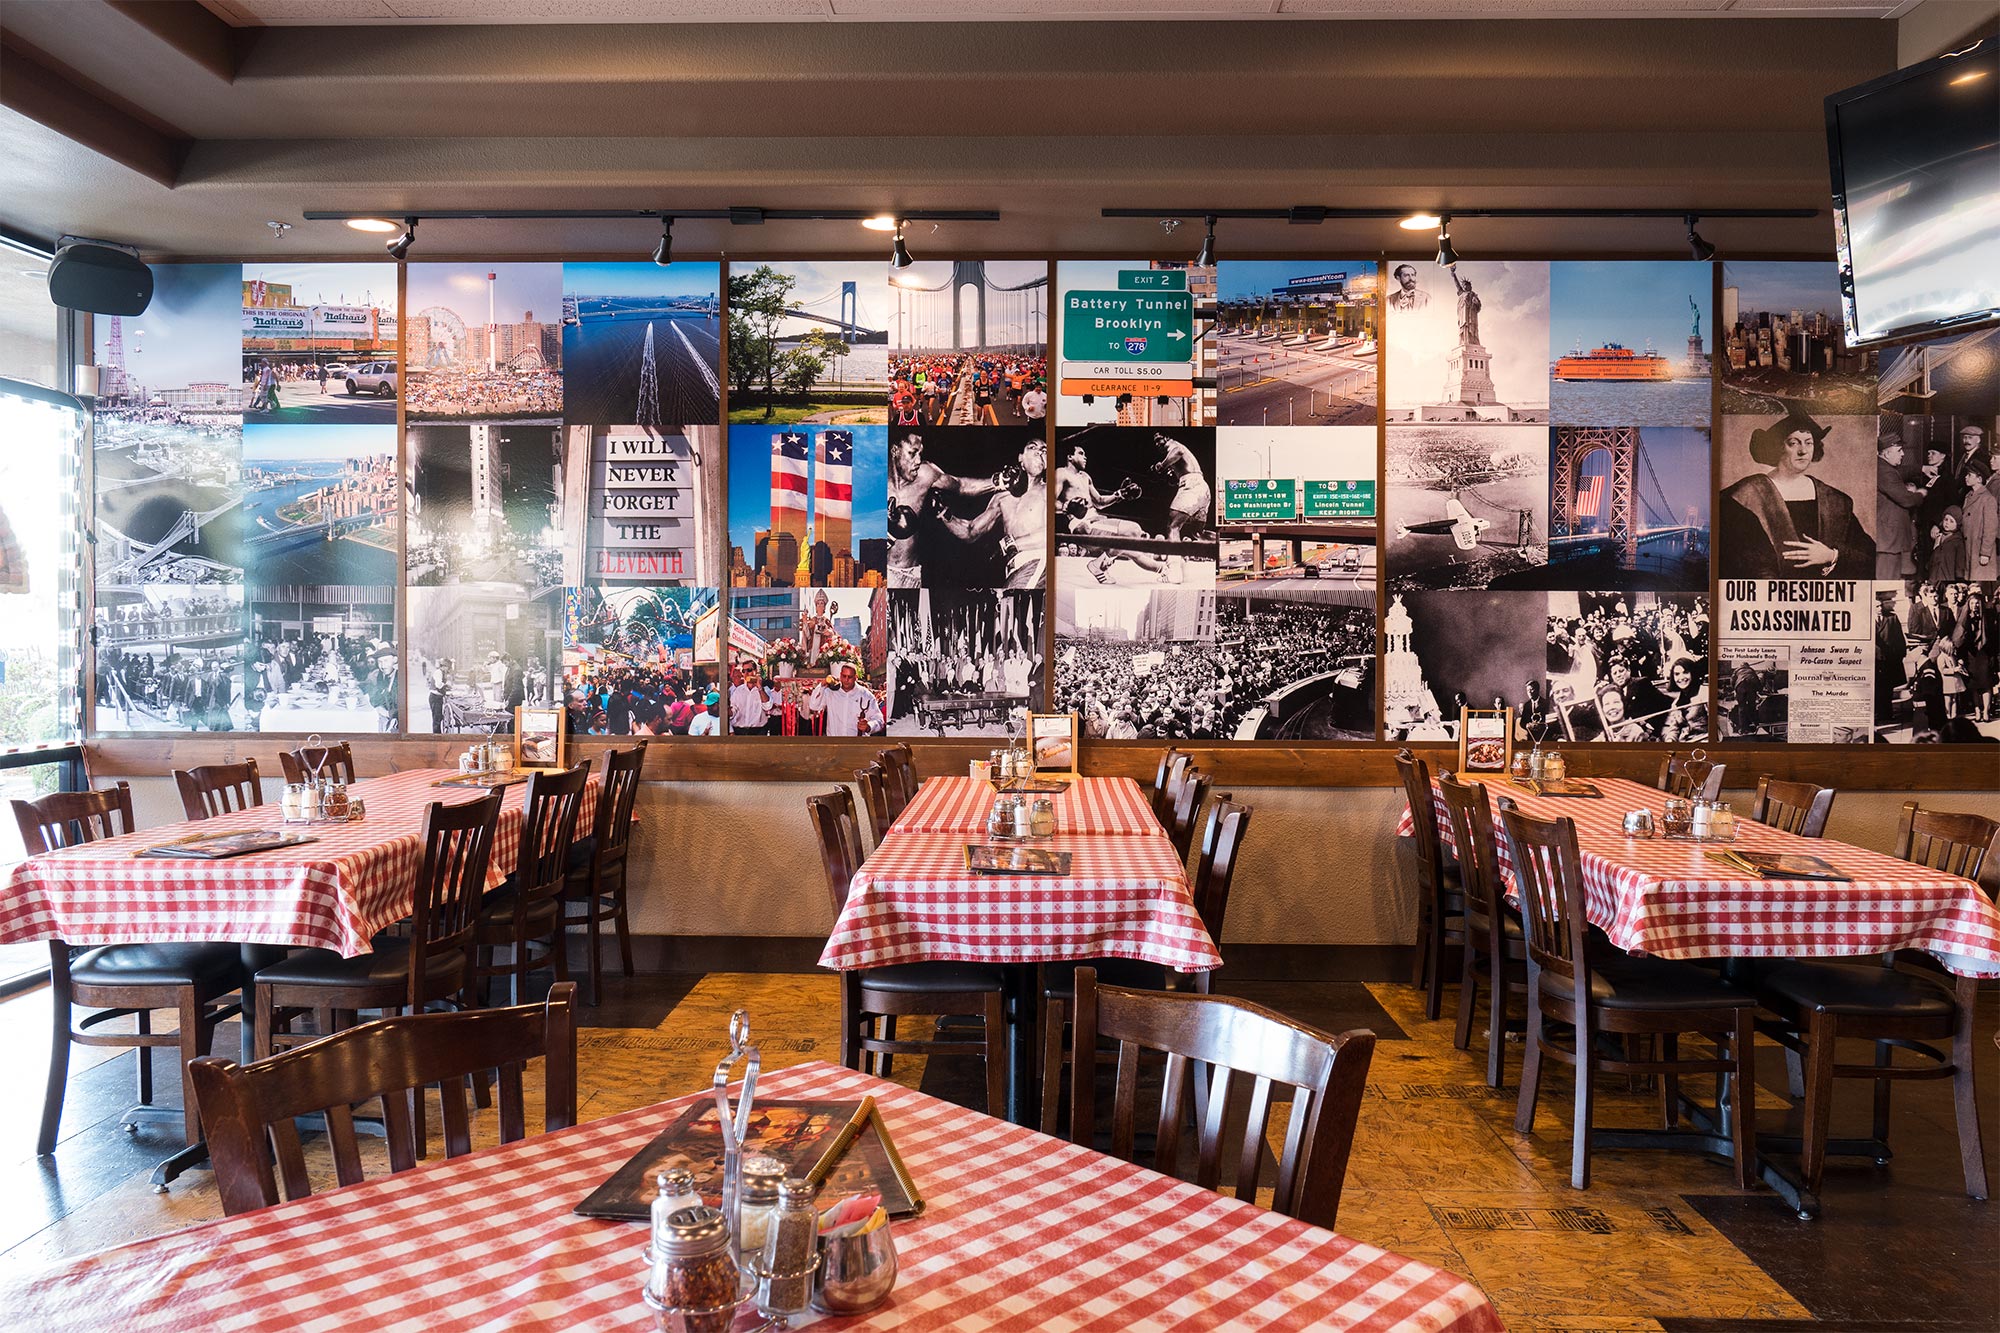 Carmine's Italian Restaurant - Las Vegas - It's that time